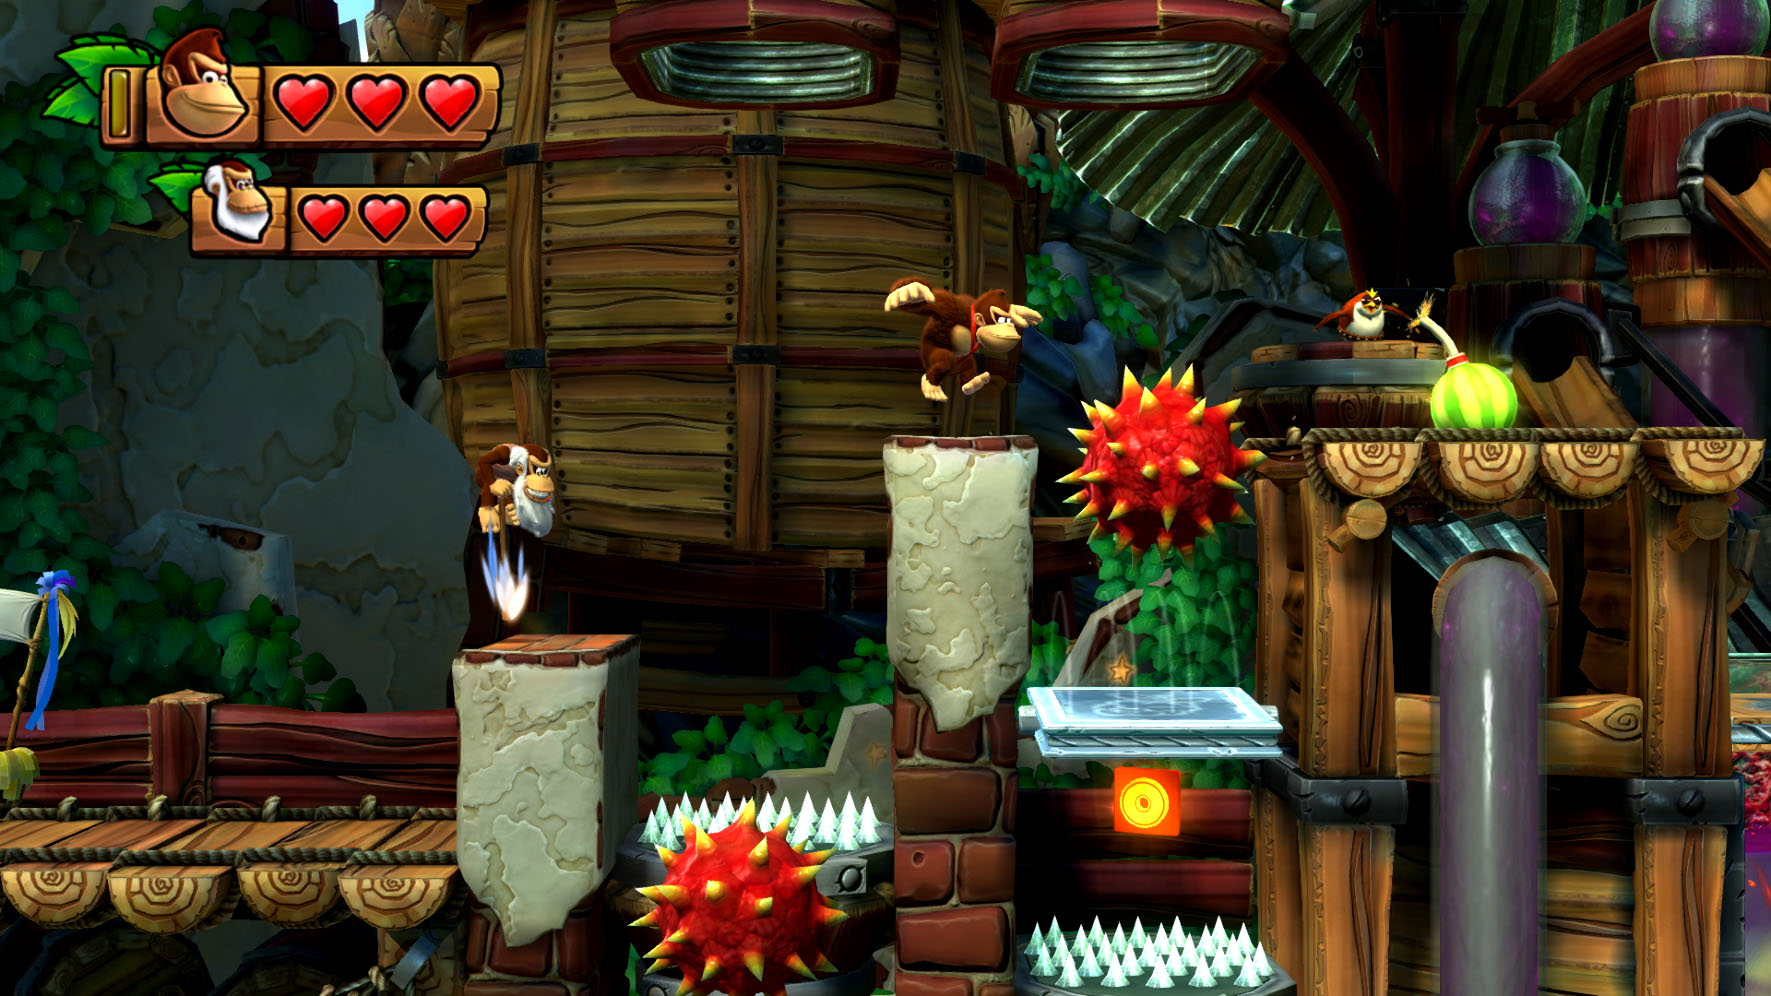 Donkey Kong Country™: Tropical Freeze, Nintendo Switch